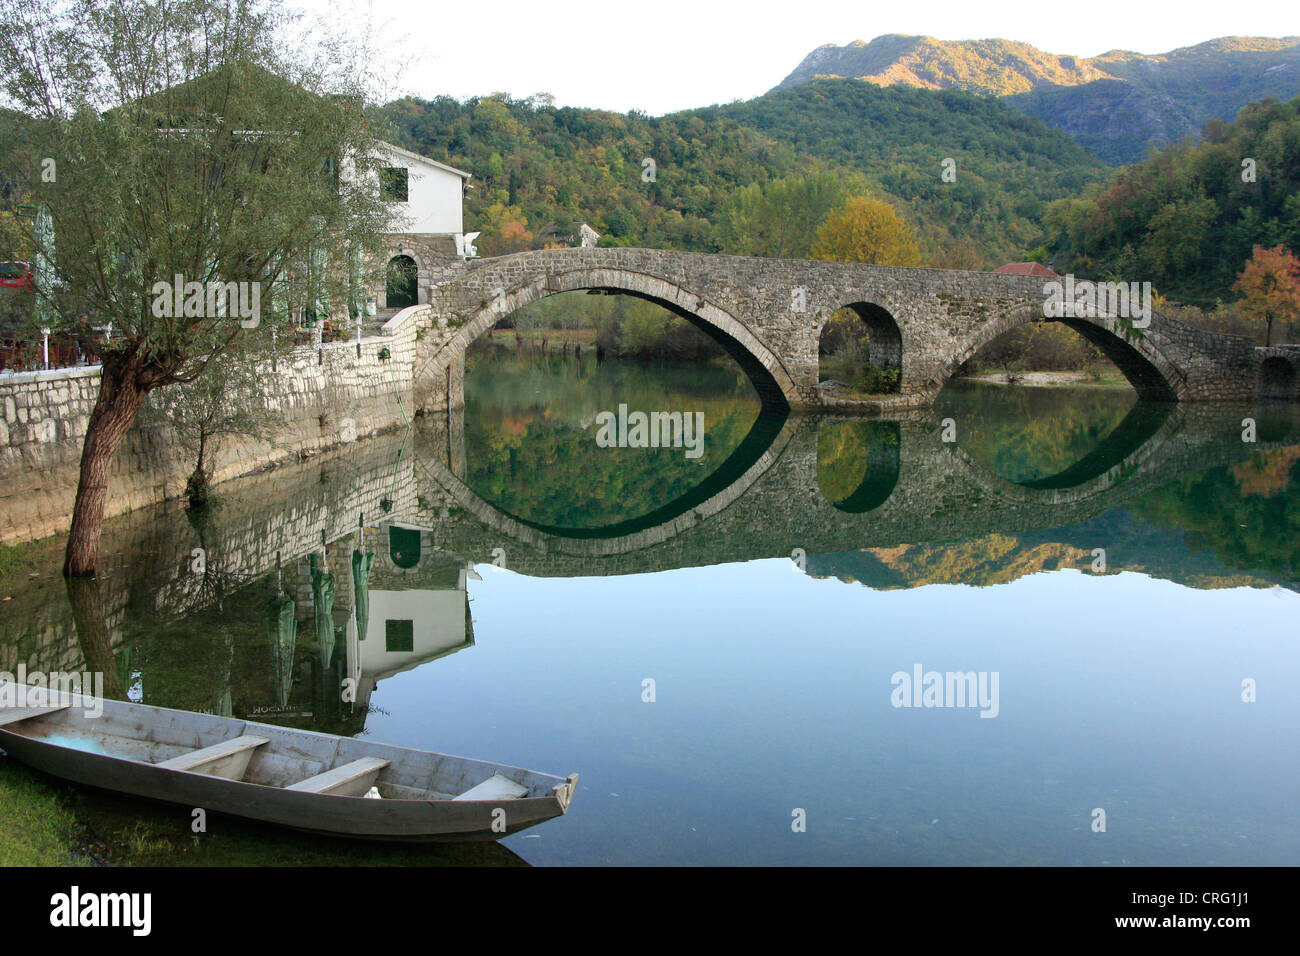 Old boat and stone bridge, Rijeka Crnojevica, Cetinje, Montenegro Stock Photo